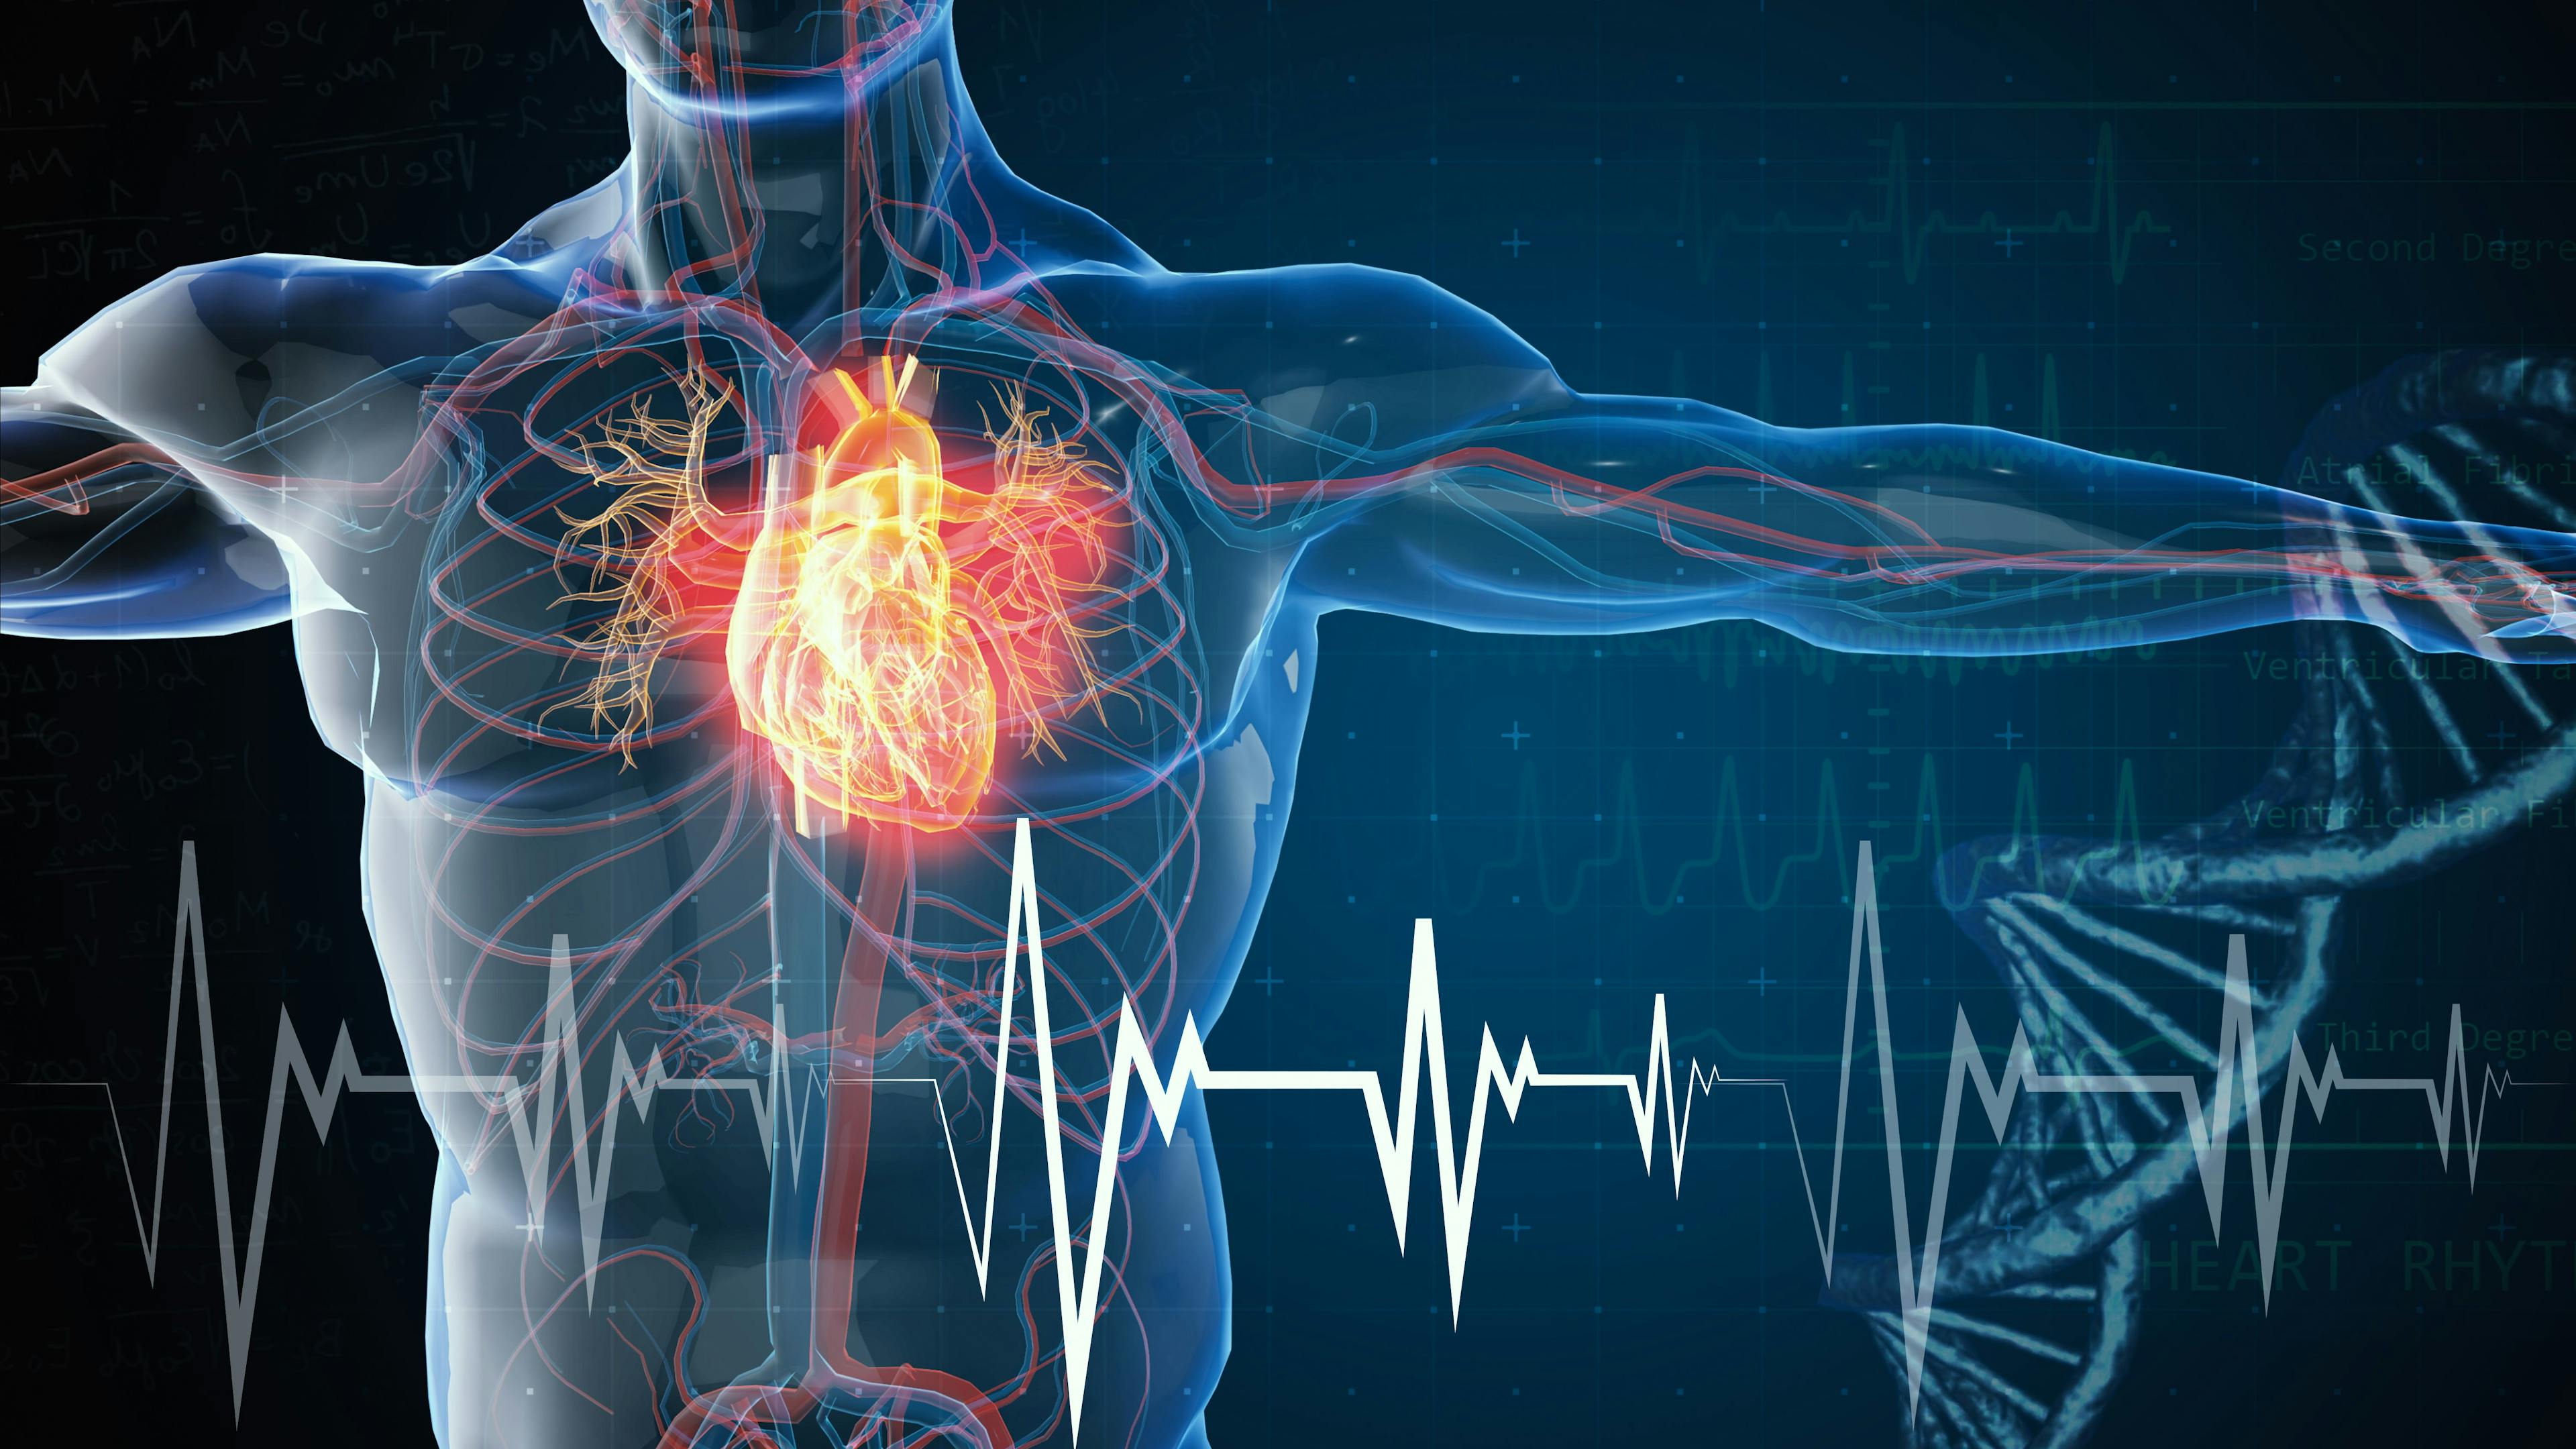 3d rendered illustration of heart attack and heart disease 3D illustration | Image Credit: santoelia - stock.adobe.com